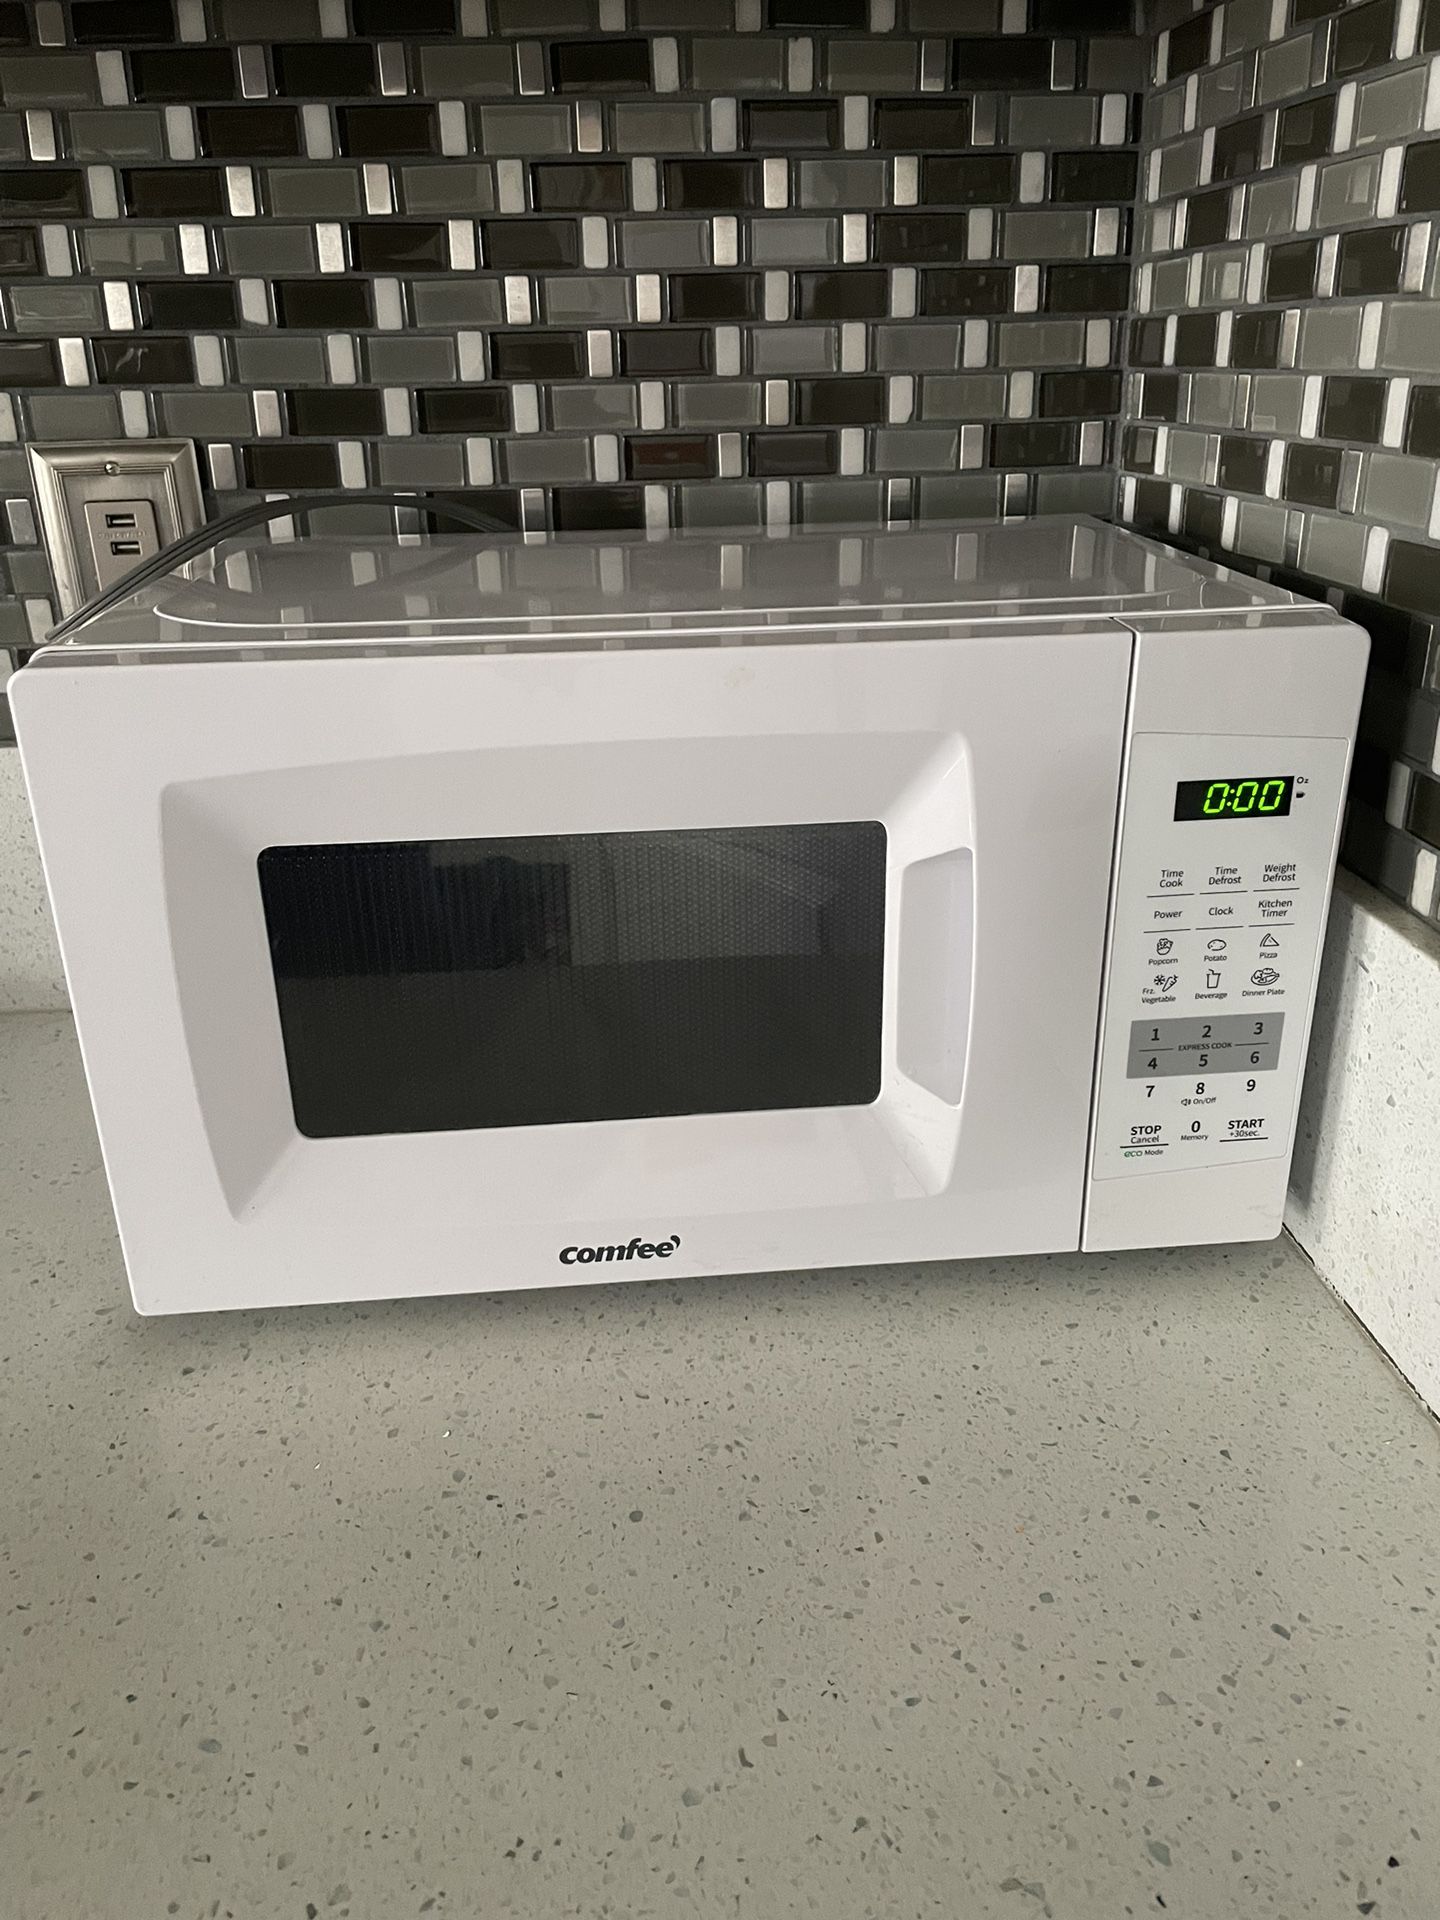 Comfee Countertop Microwave 